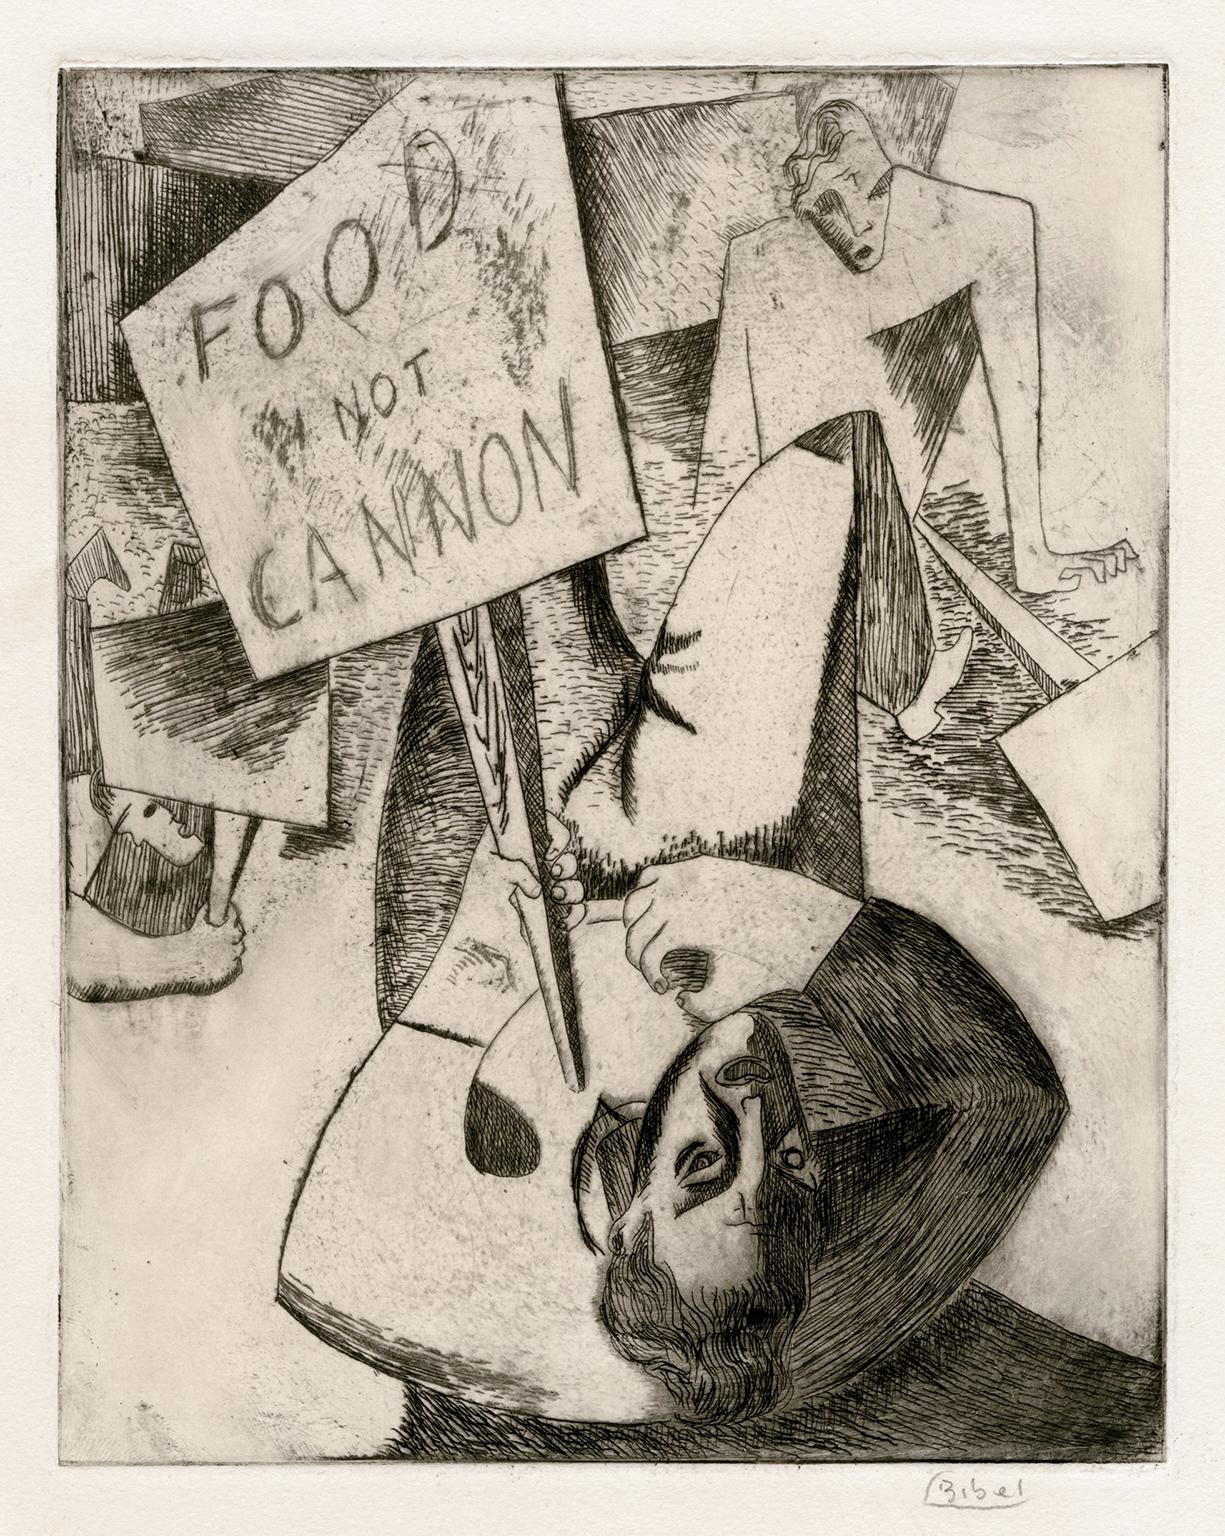 Leon Bibel Figurative Print - 'Food Not Cannon' — rare WPA modernist work of  Social Conscience